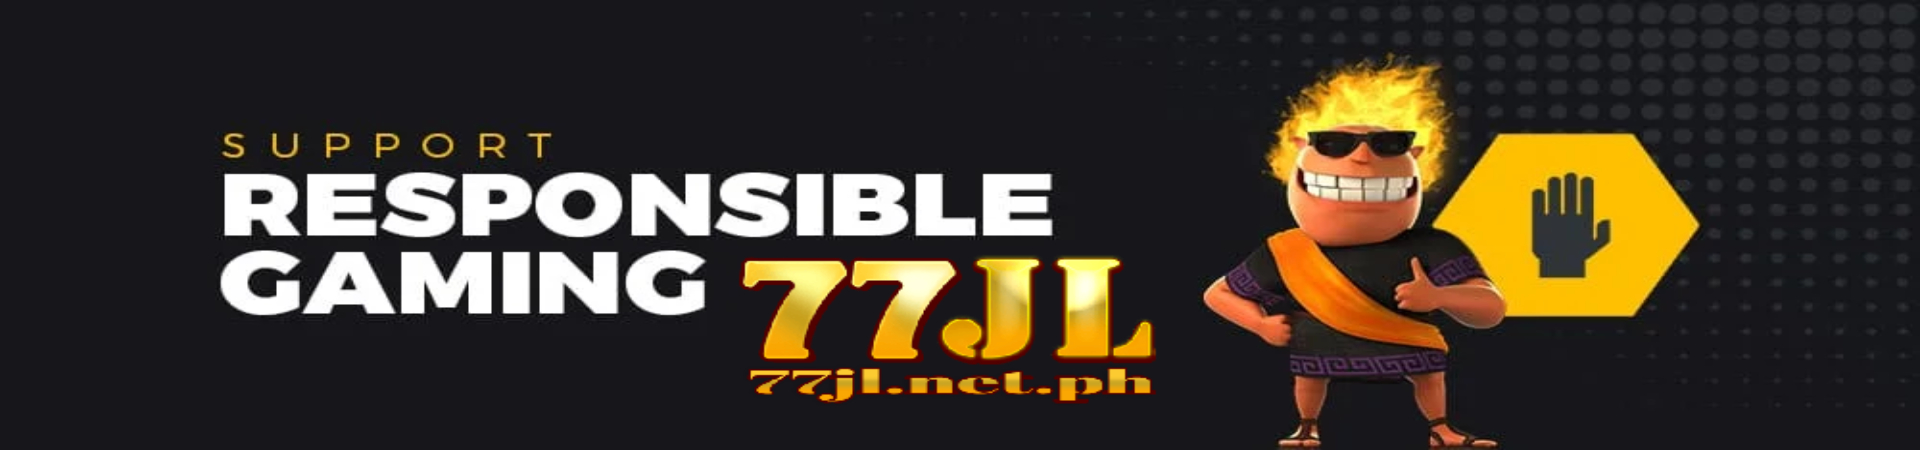 games responsibly 77jl banner